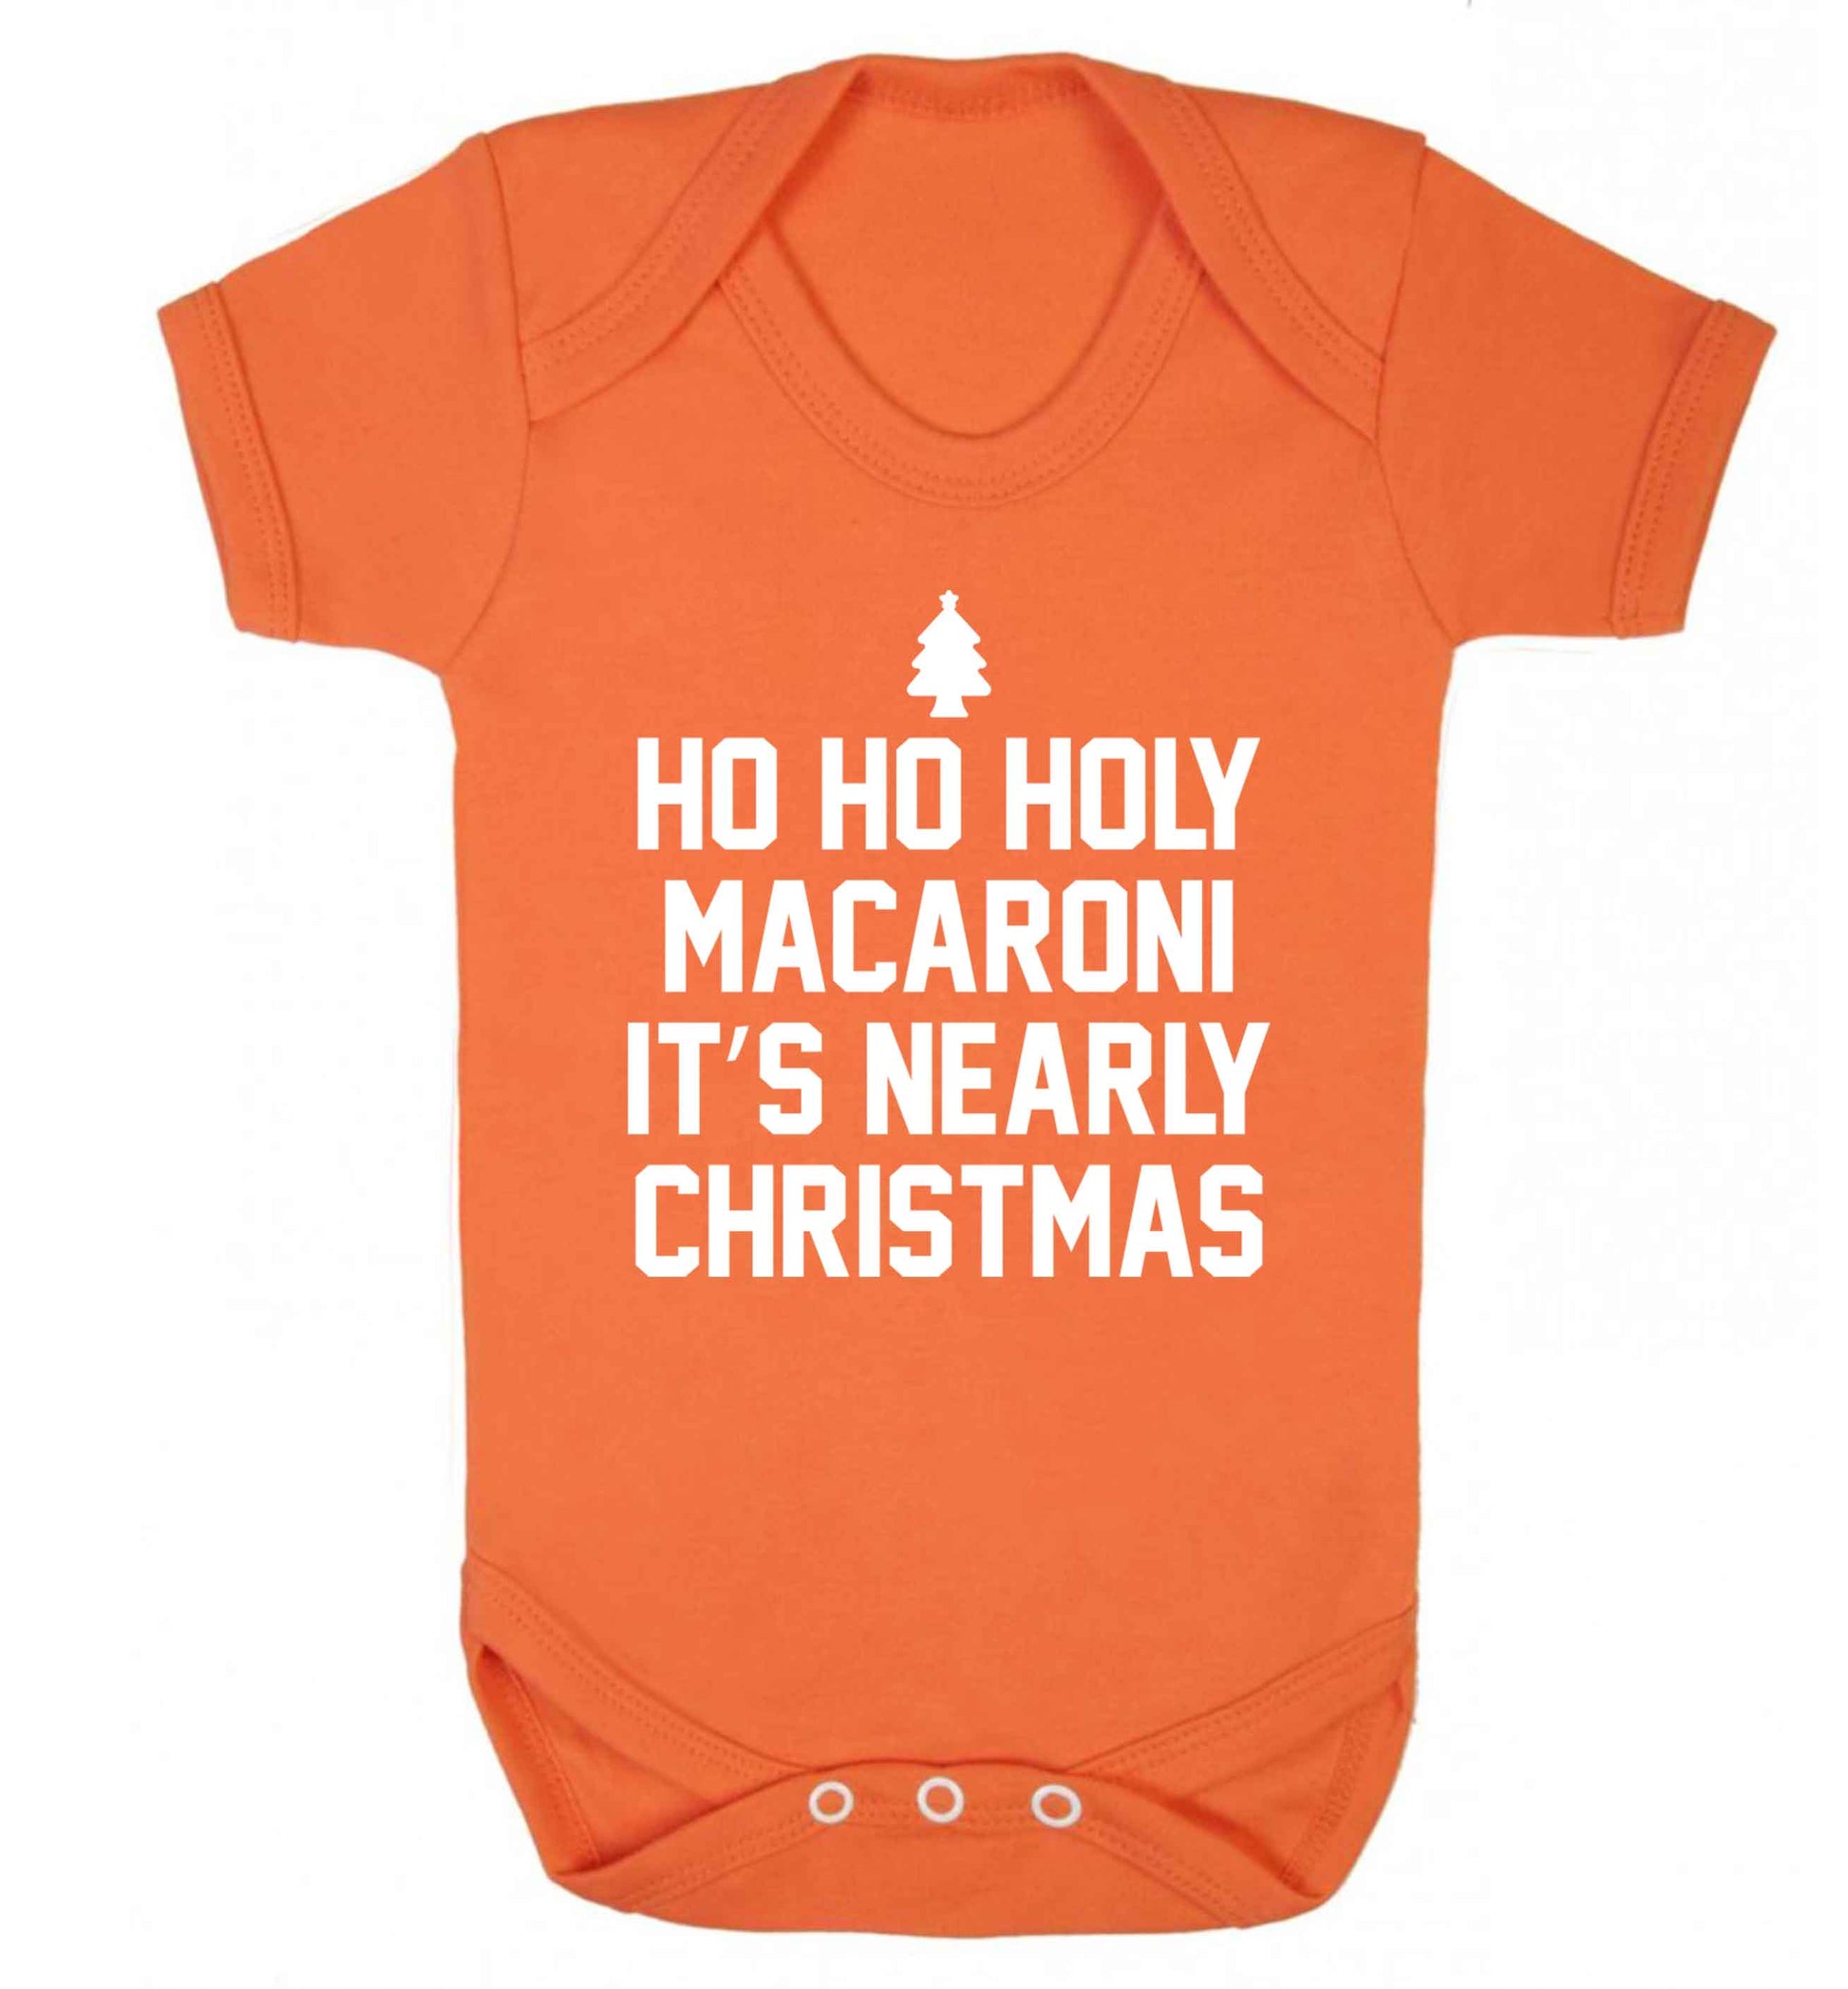 Ho ho holy macaroni it's nearly Christmas Baby Vest orange 18-24 months